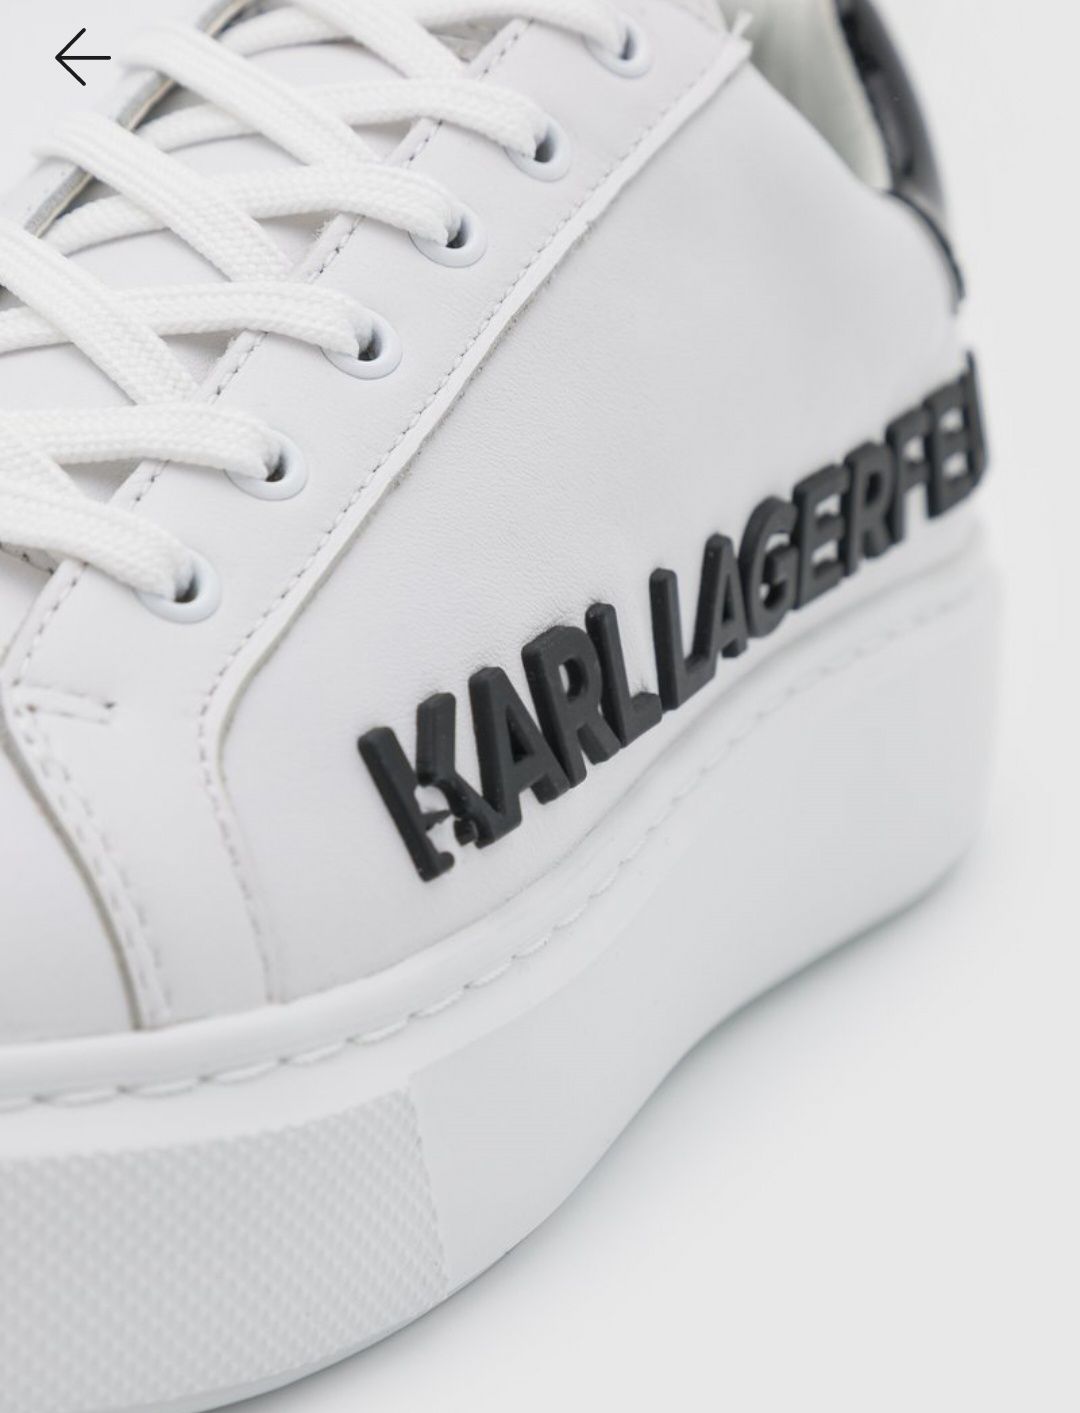 Karl Lagerfeld nowe białe sneakersy r. 36